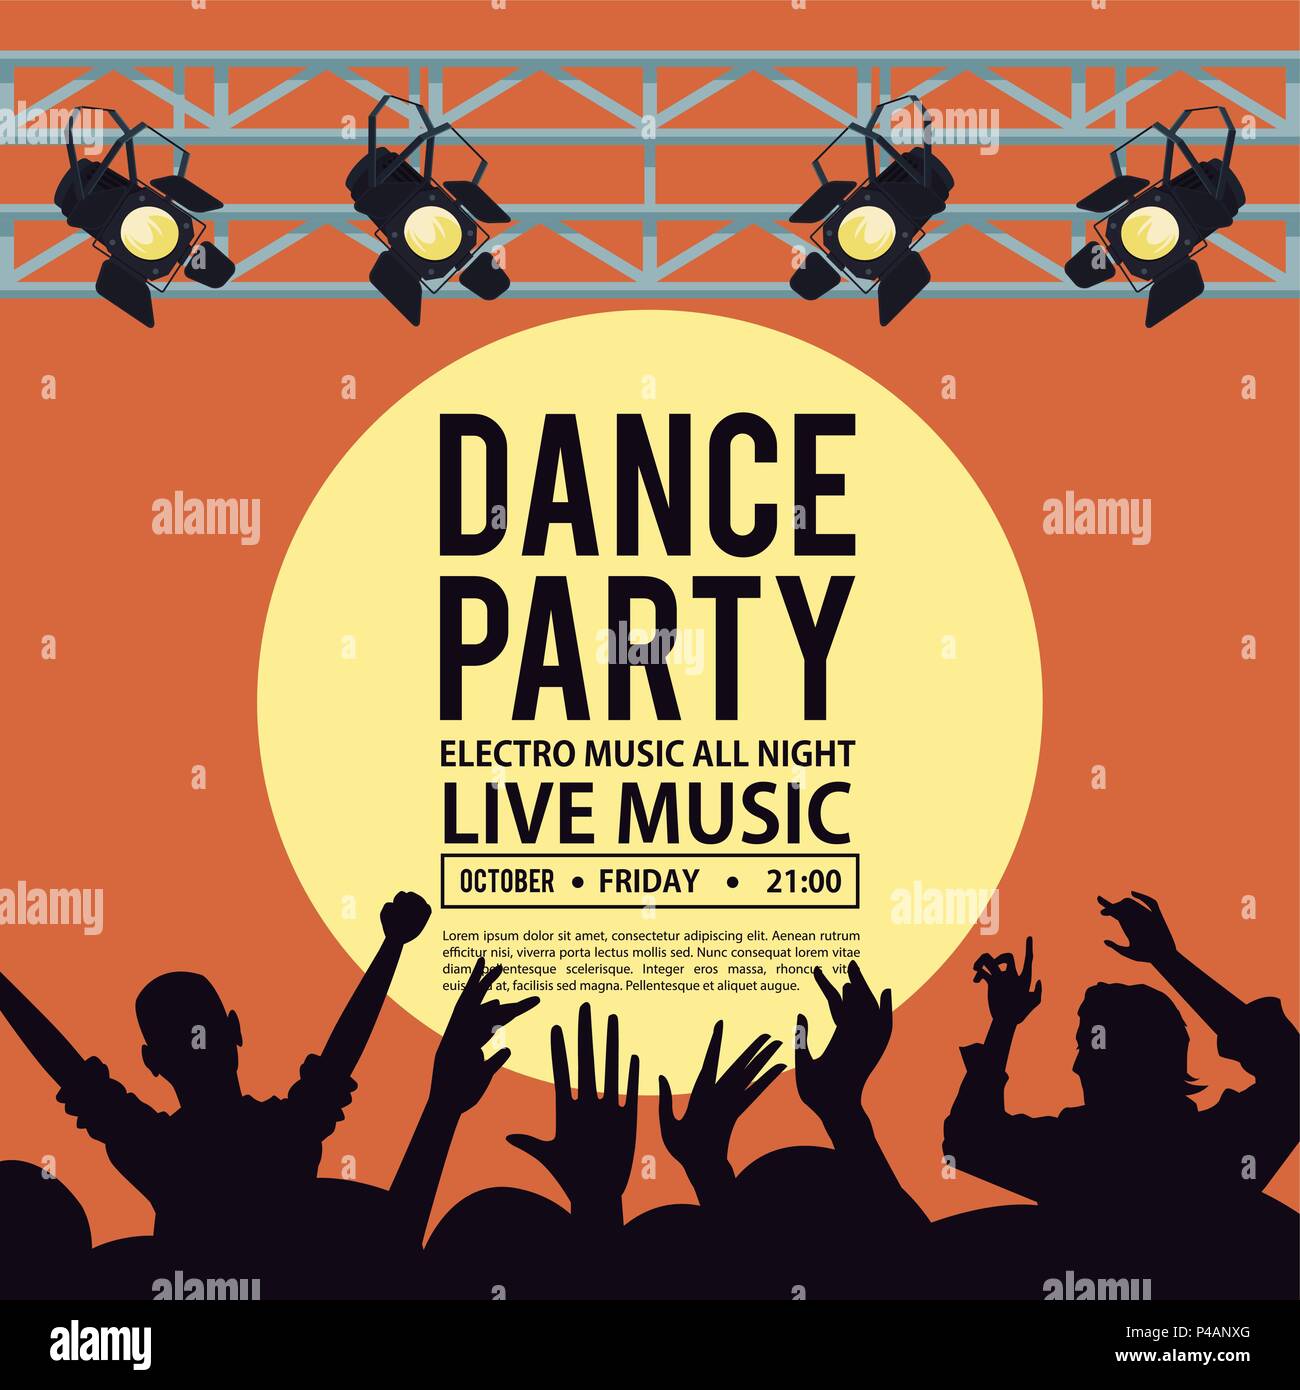 Dance Party Einladung Stock Vektorgrafik Alamy